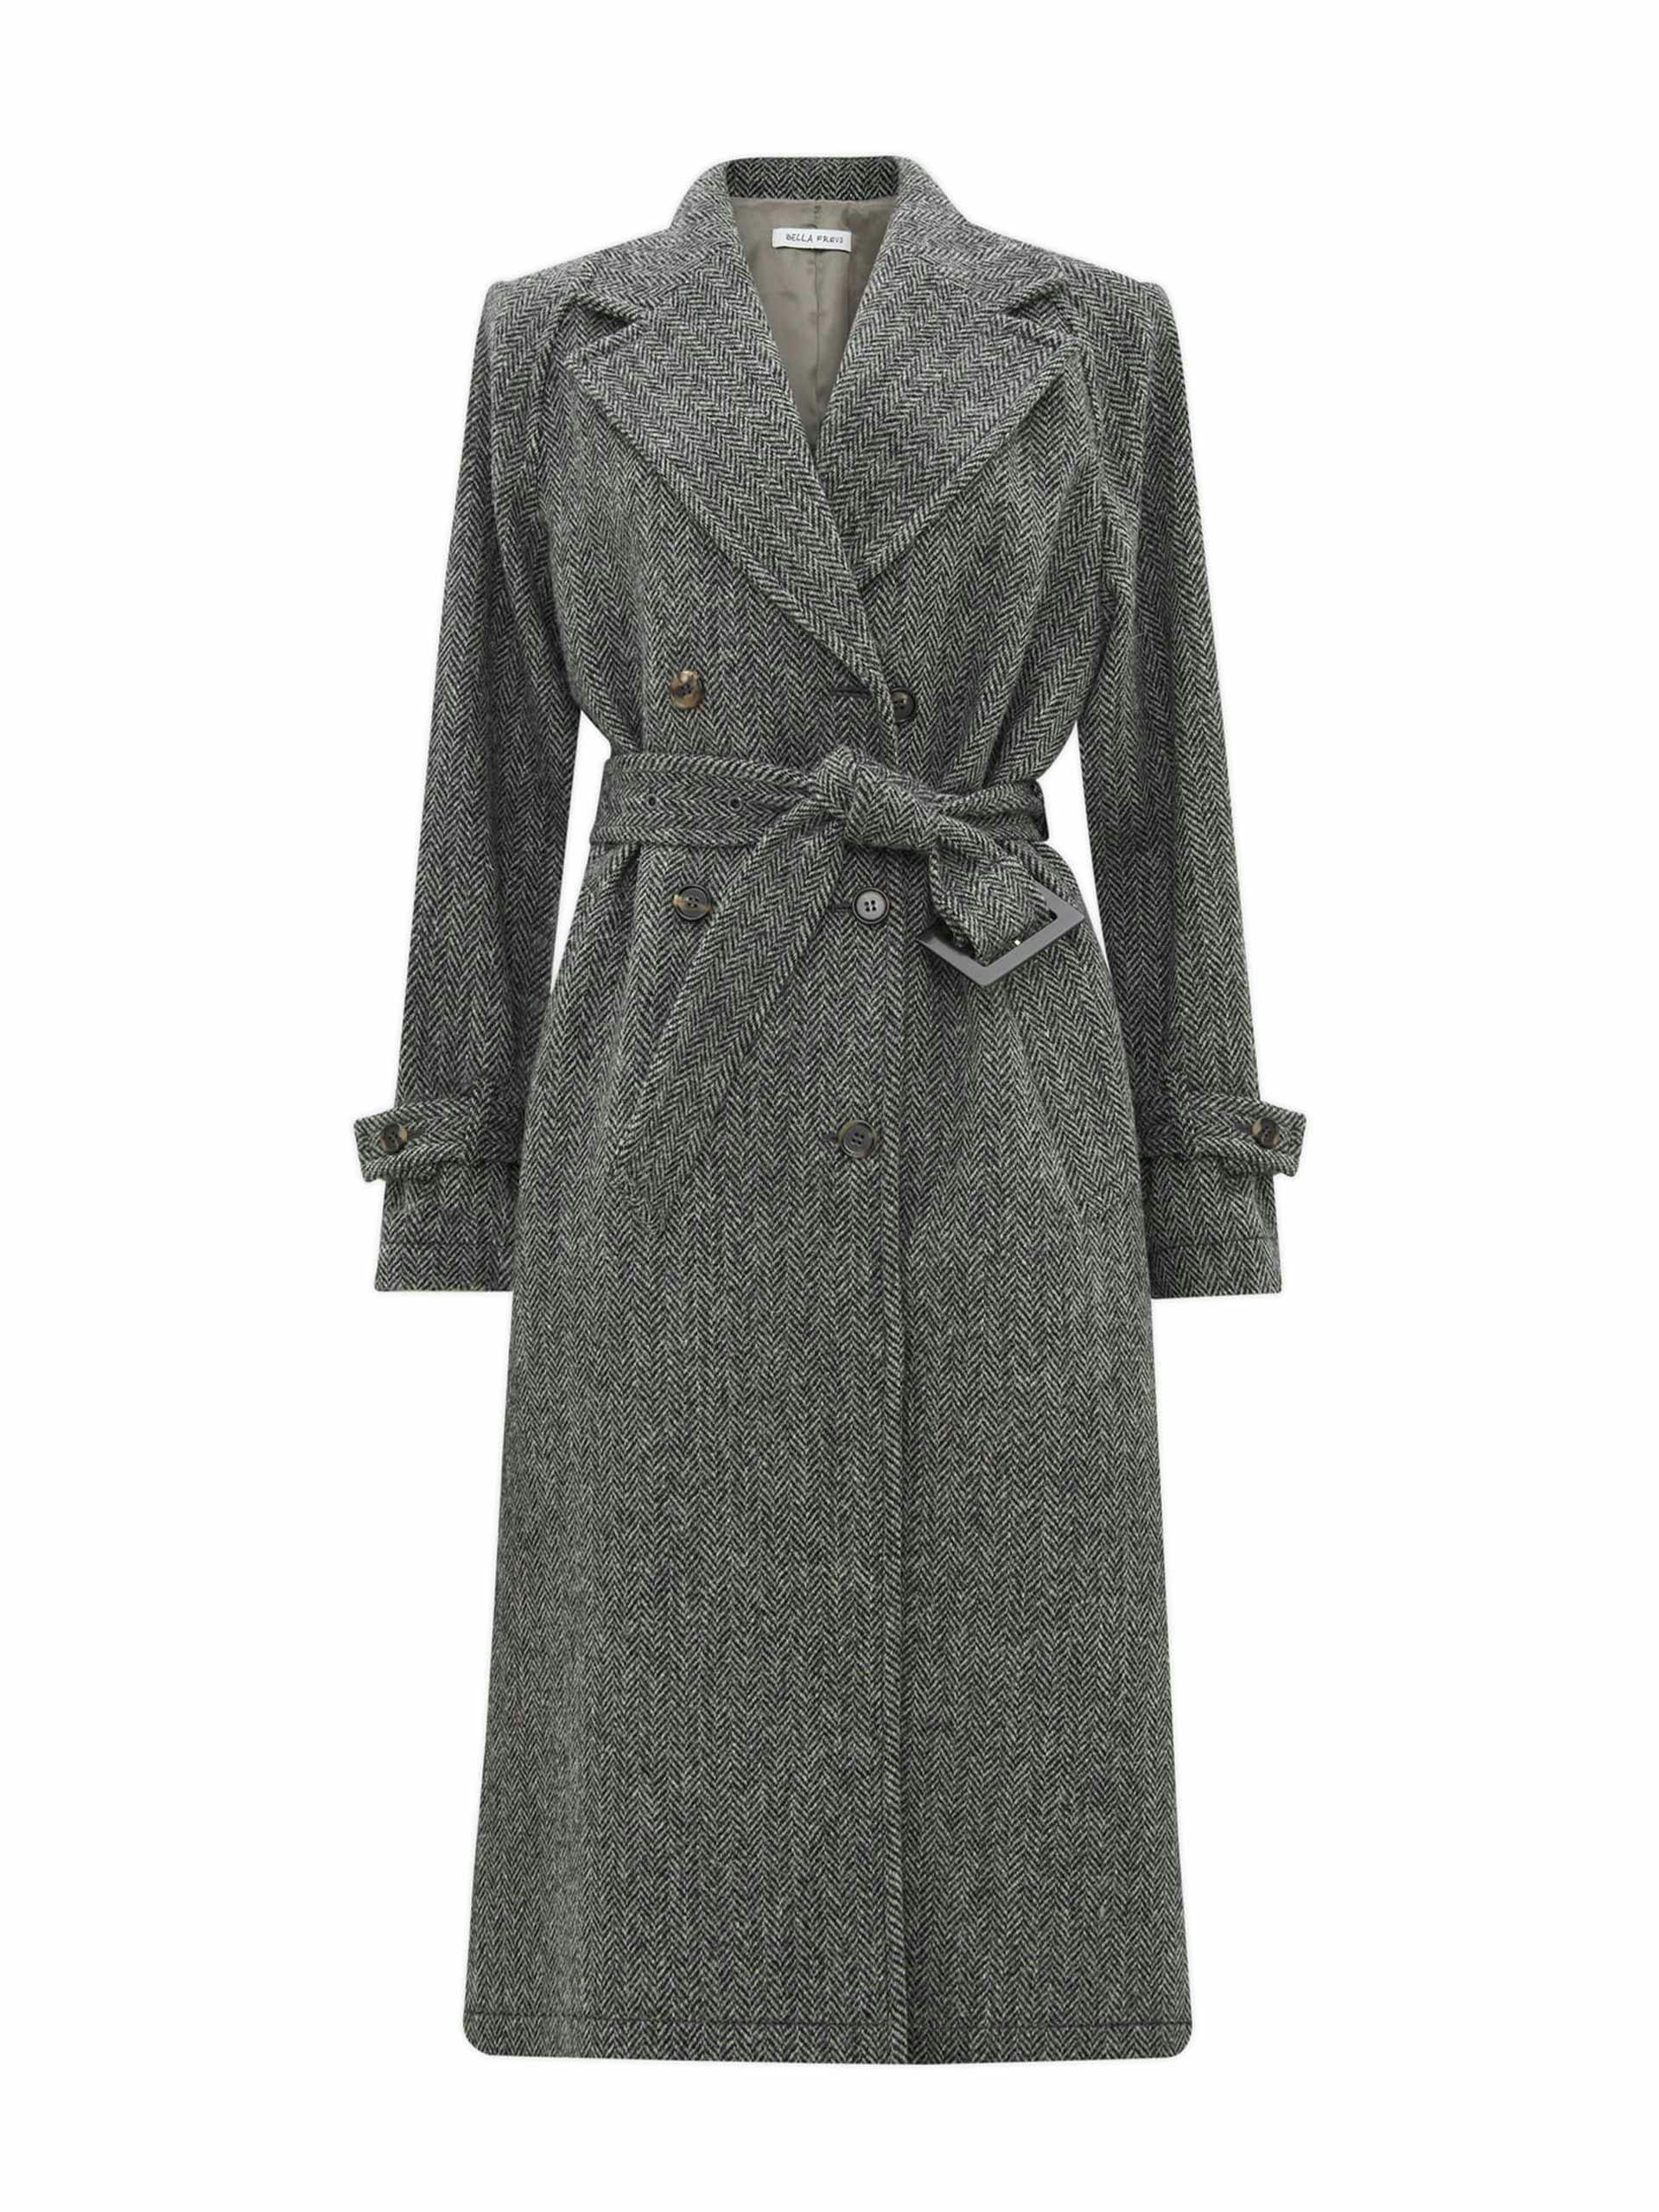 Herringbone tweed coat